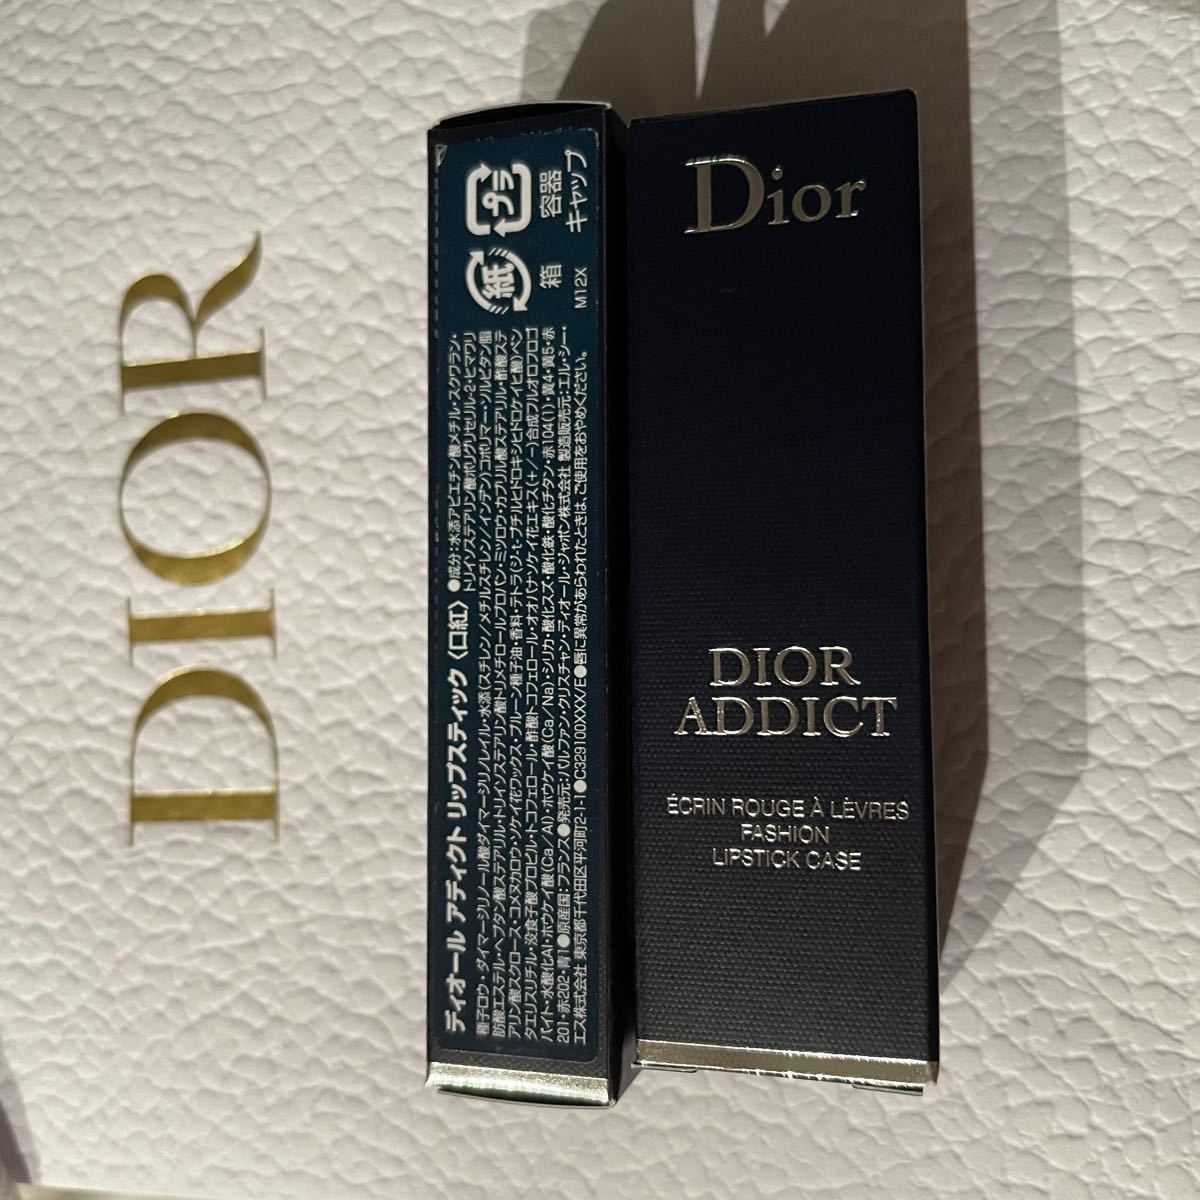 dior【新発売】完売品　アディクトリップスティック リフィル 422＆ ピンクカナージュ ケース　セット　国内百貨店購入